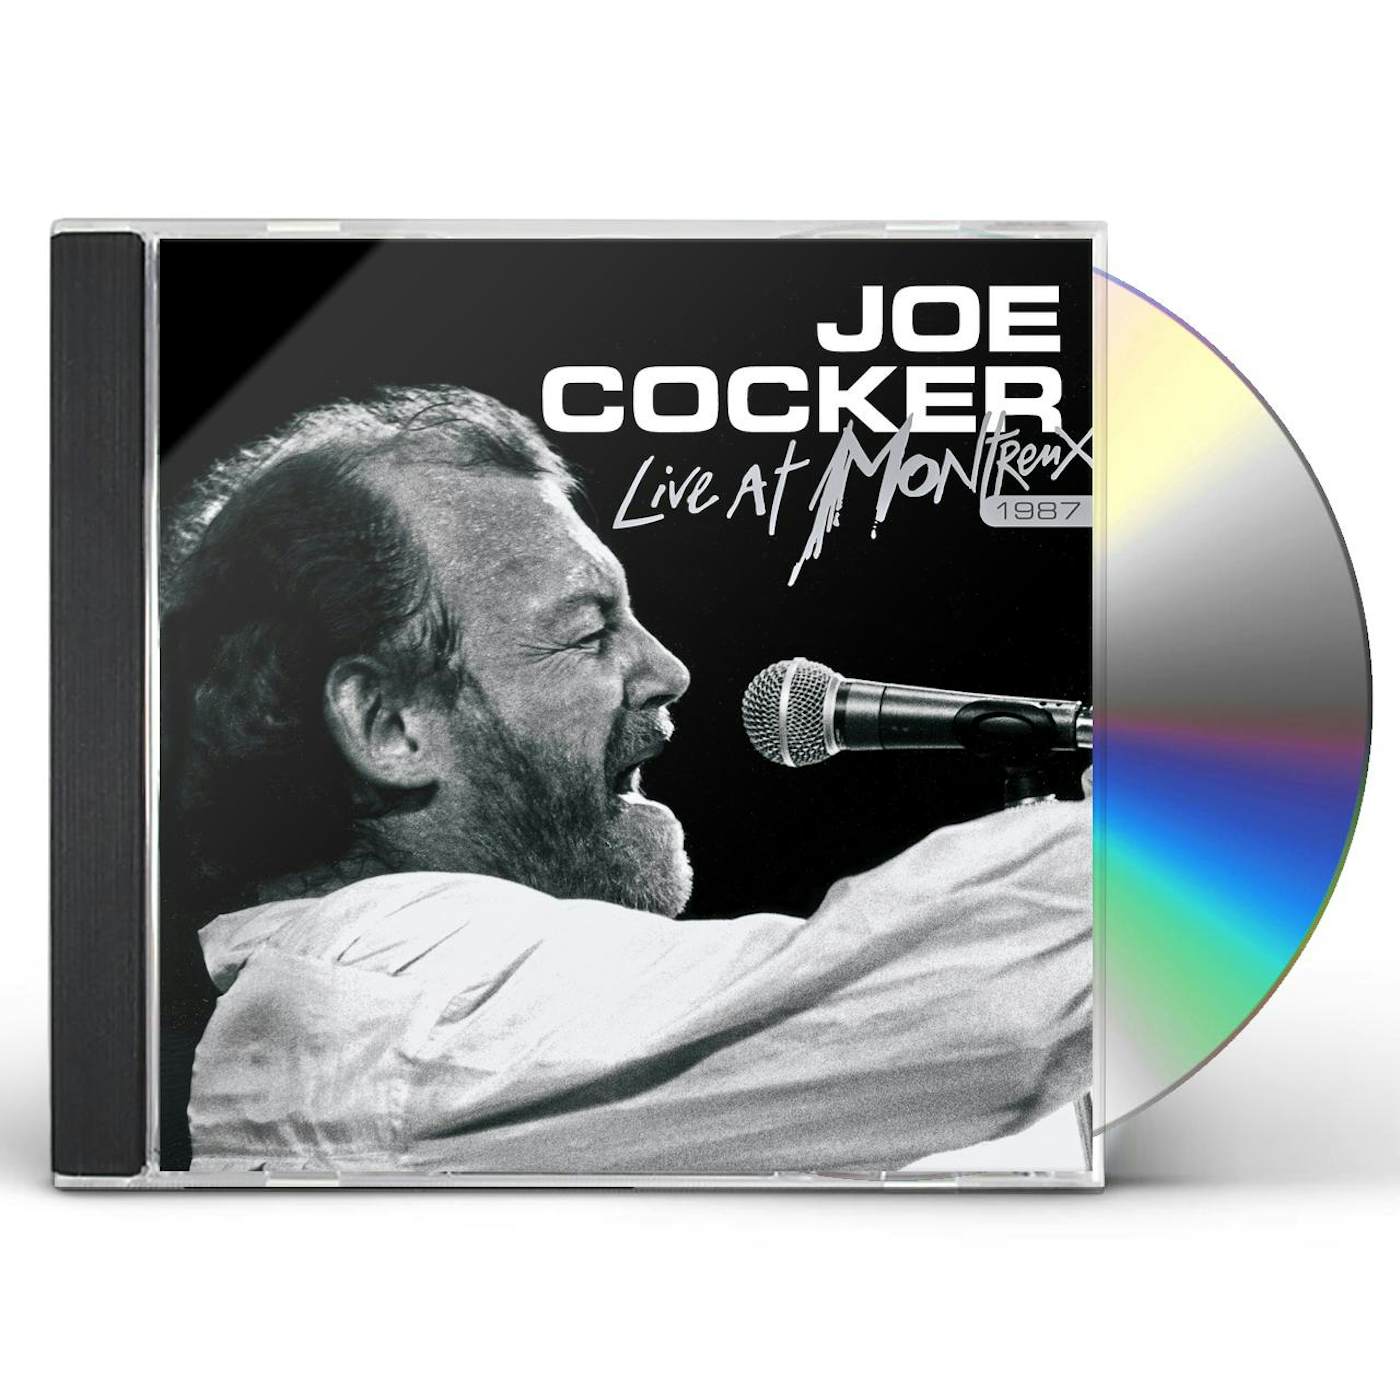 Joe Cocker LIVE AT MONTREUX 1987 CD